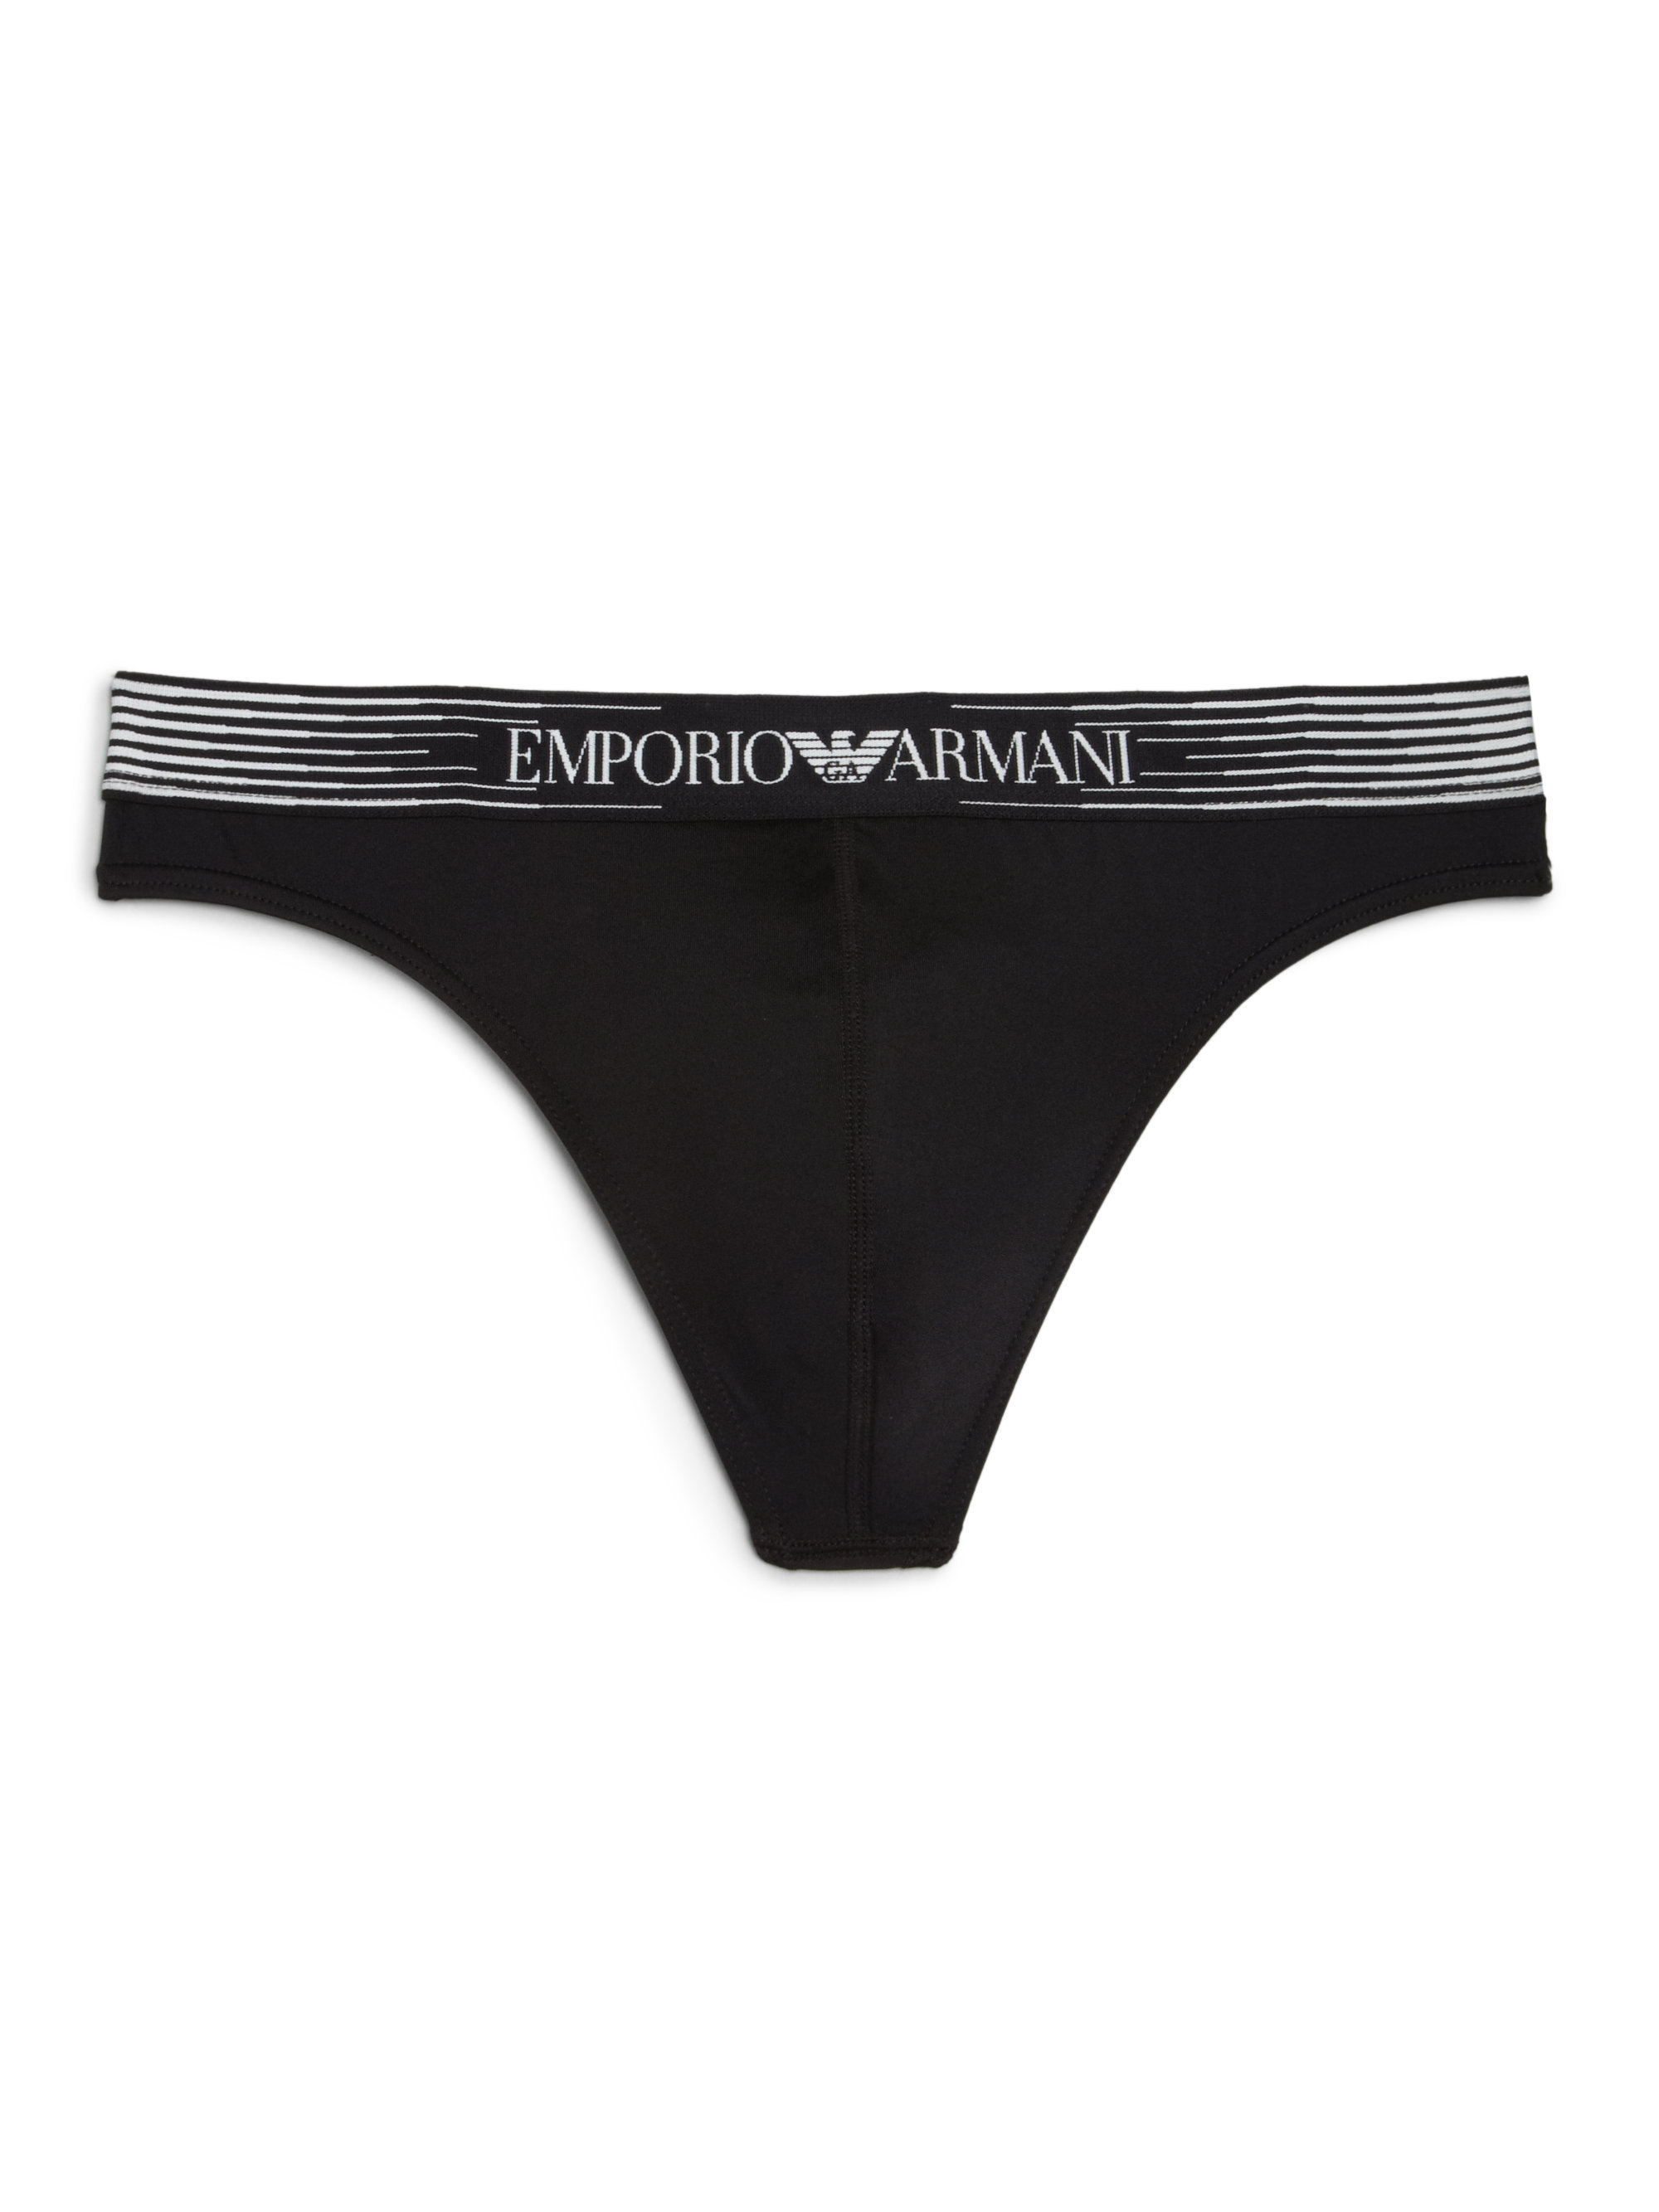 Lyst - Emporio Armani Logo Thong in Black for Men